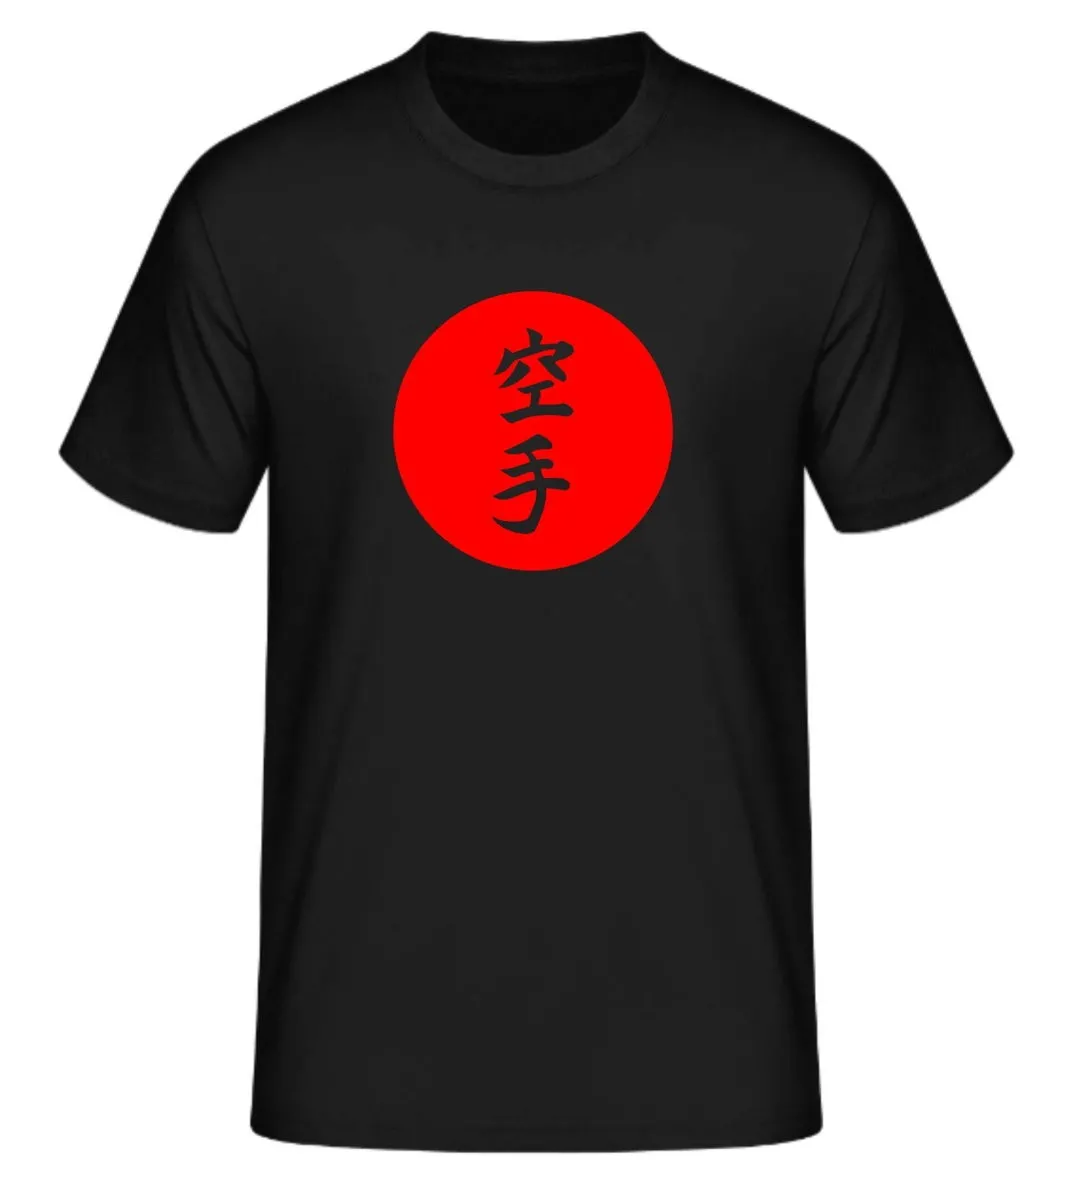 Camiseta negro karate sol con caracteres japoneses